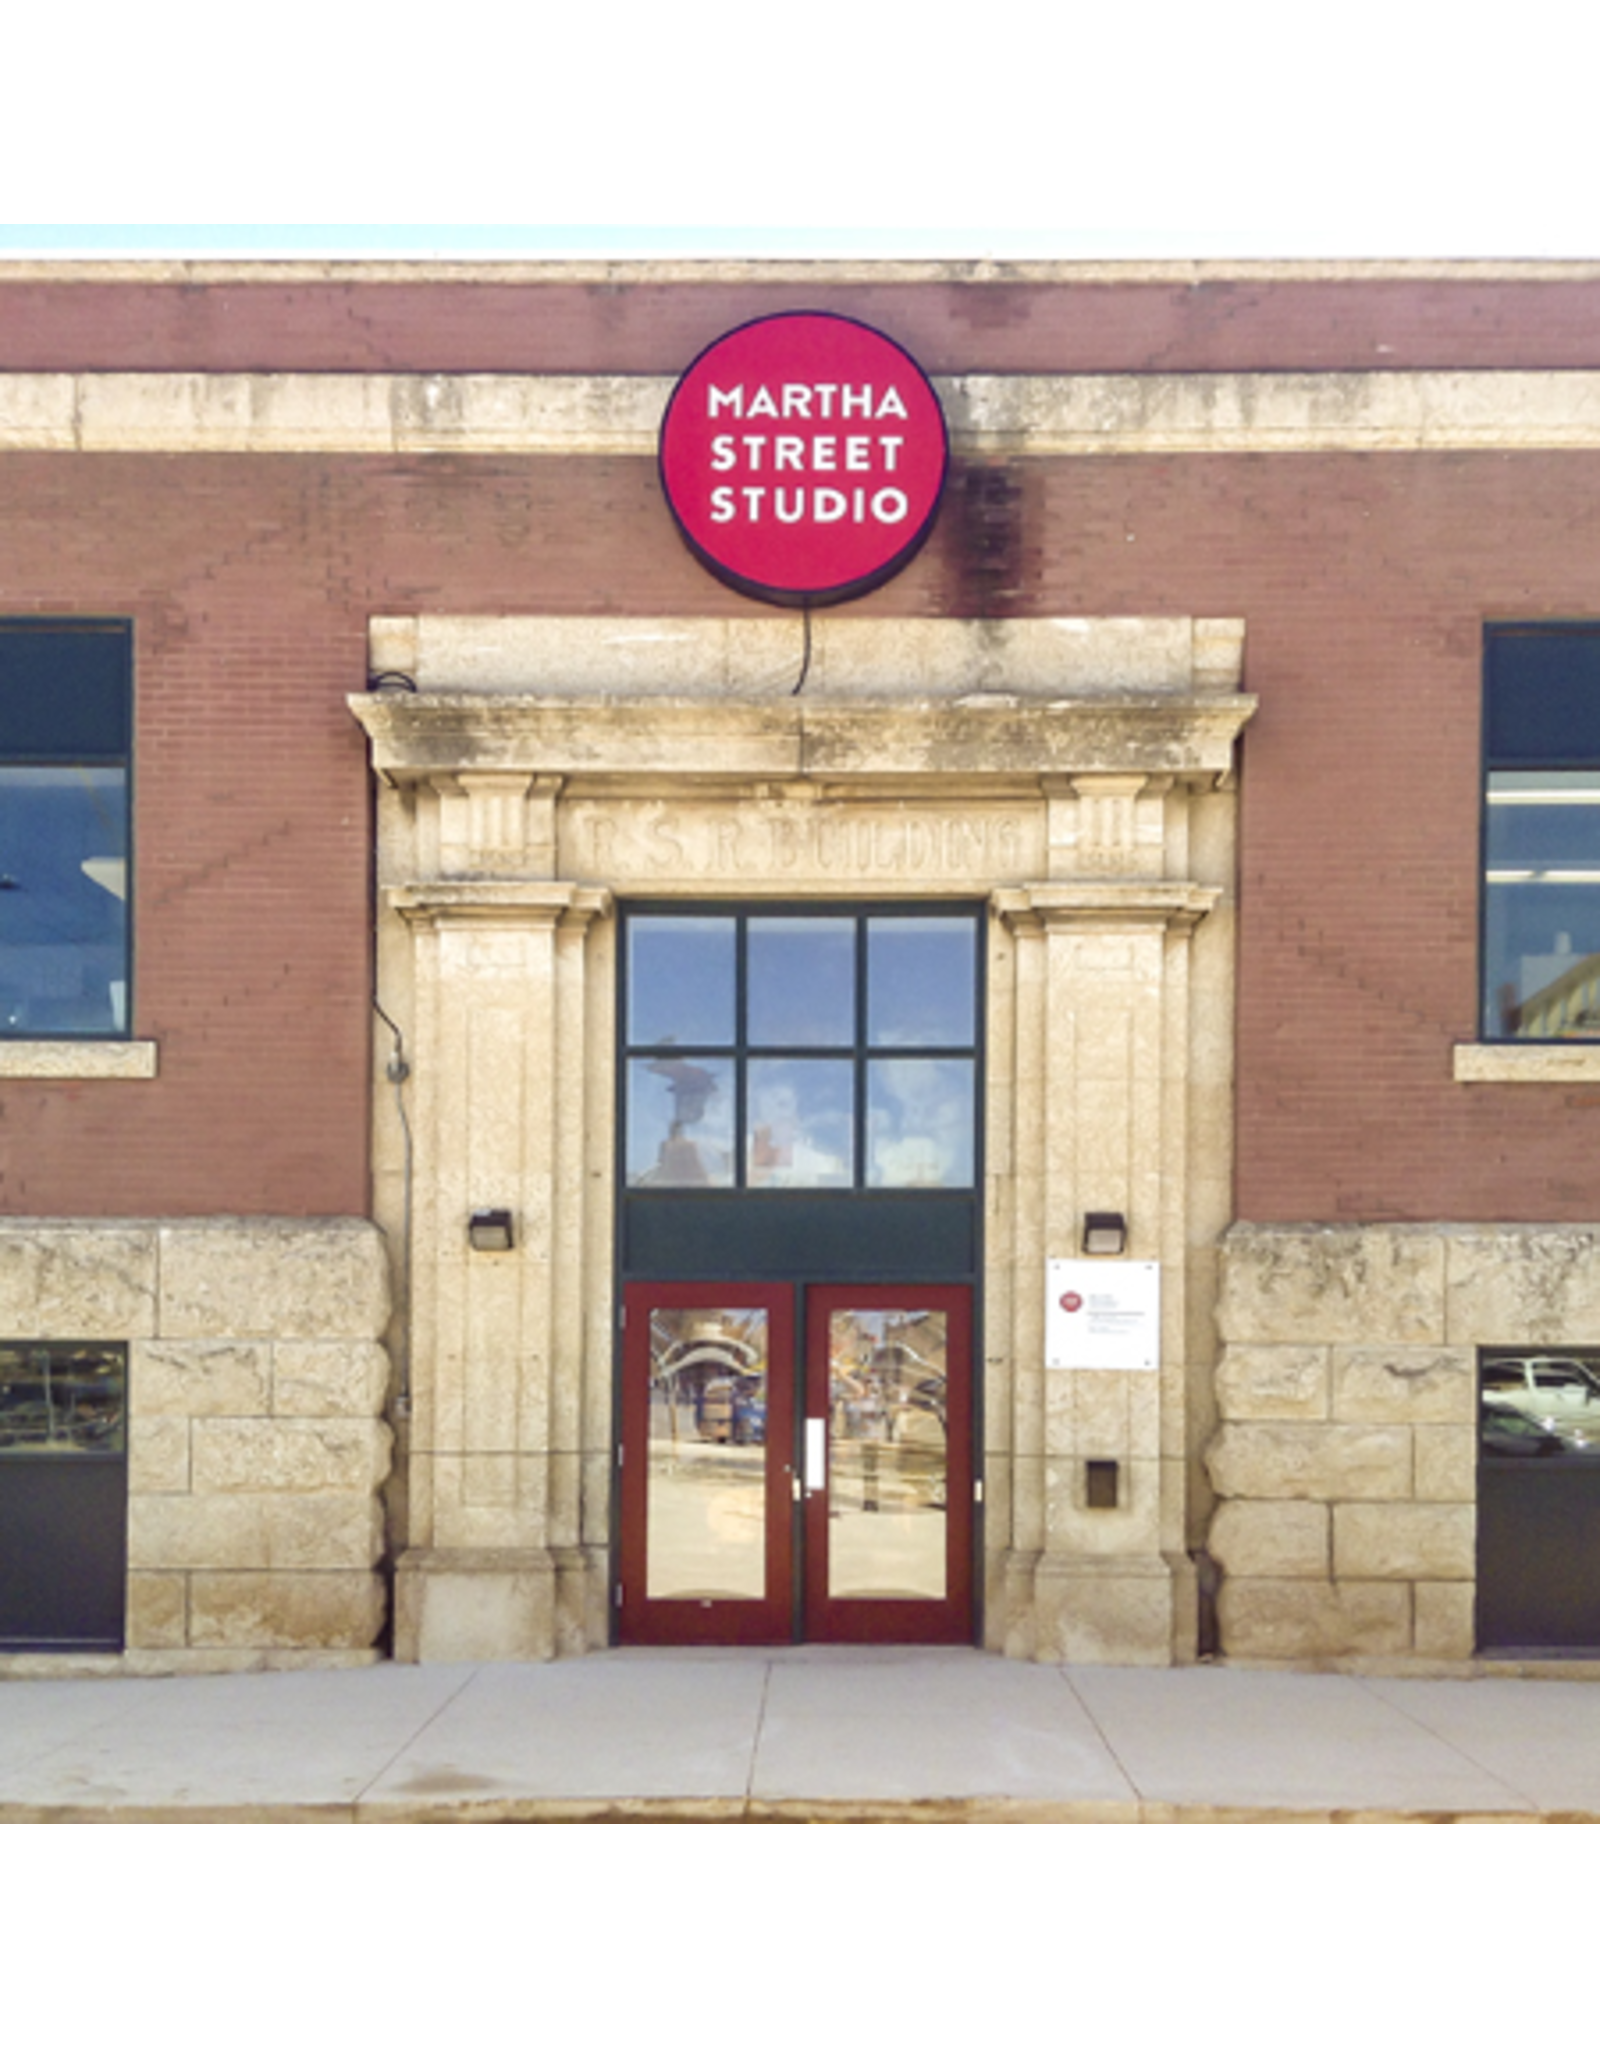 Martha Street Studio 1 year membership - Regular